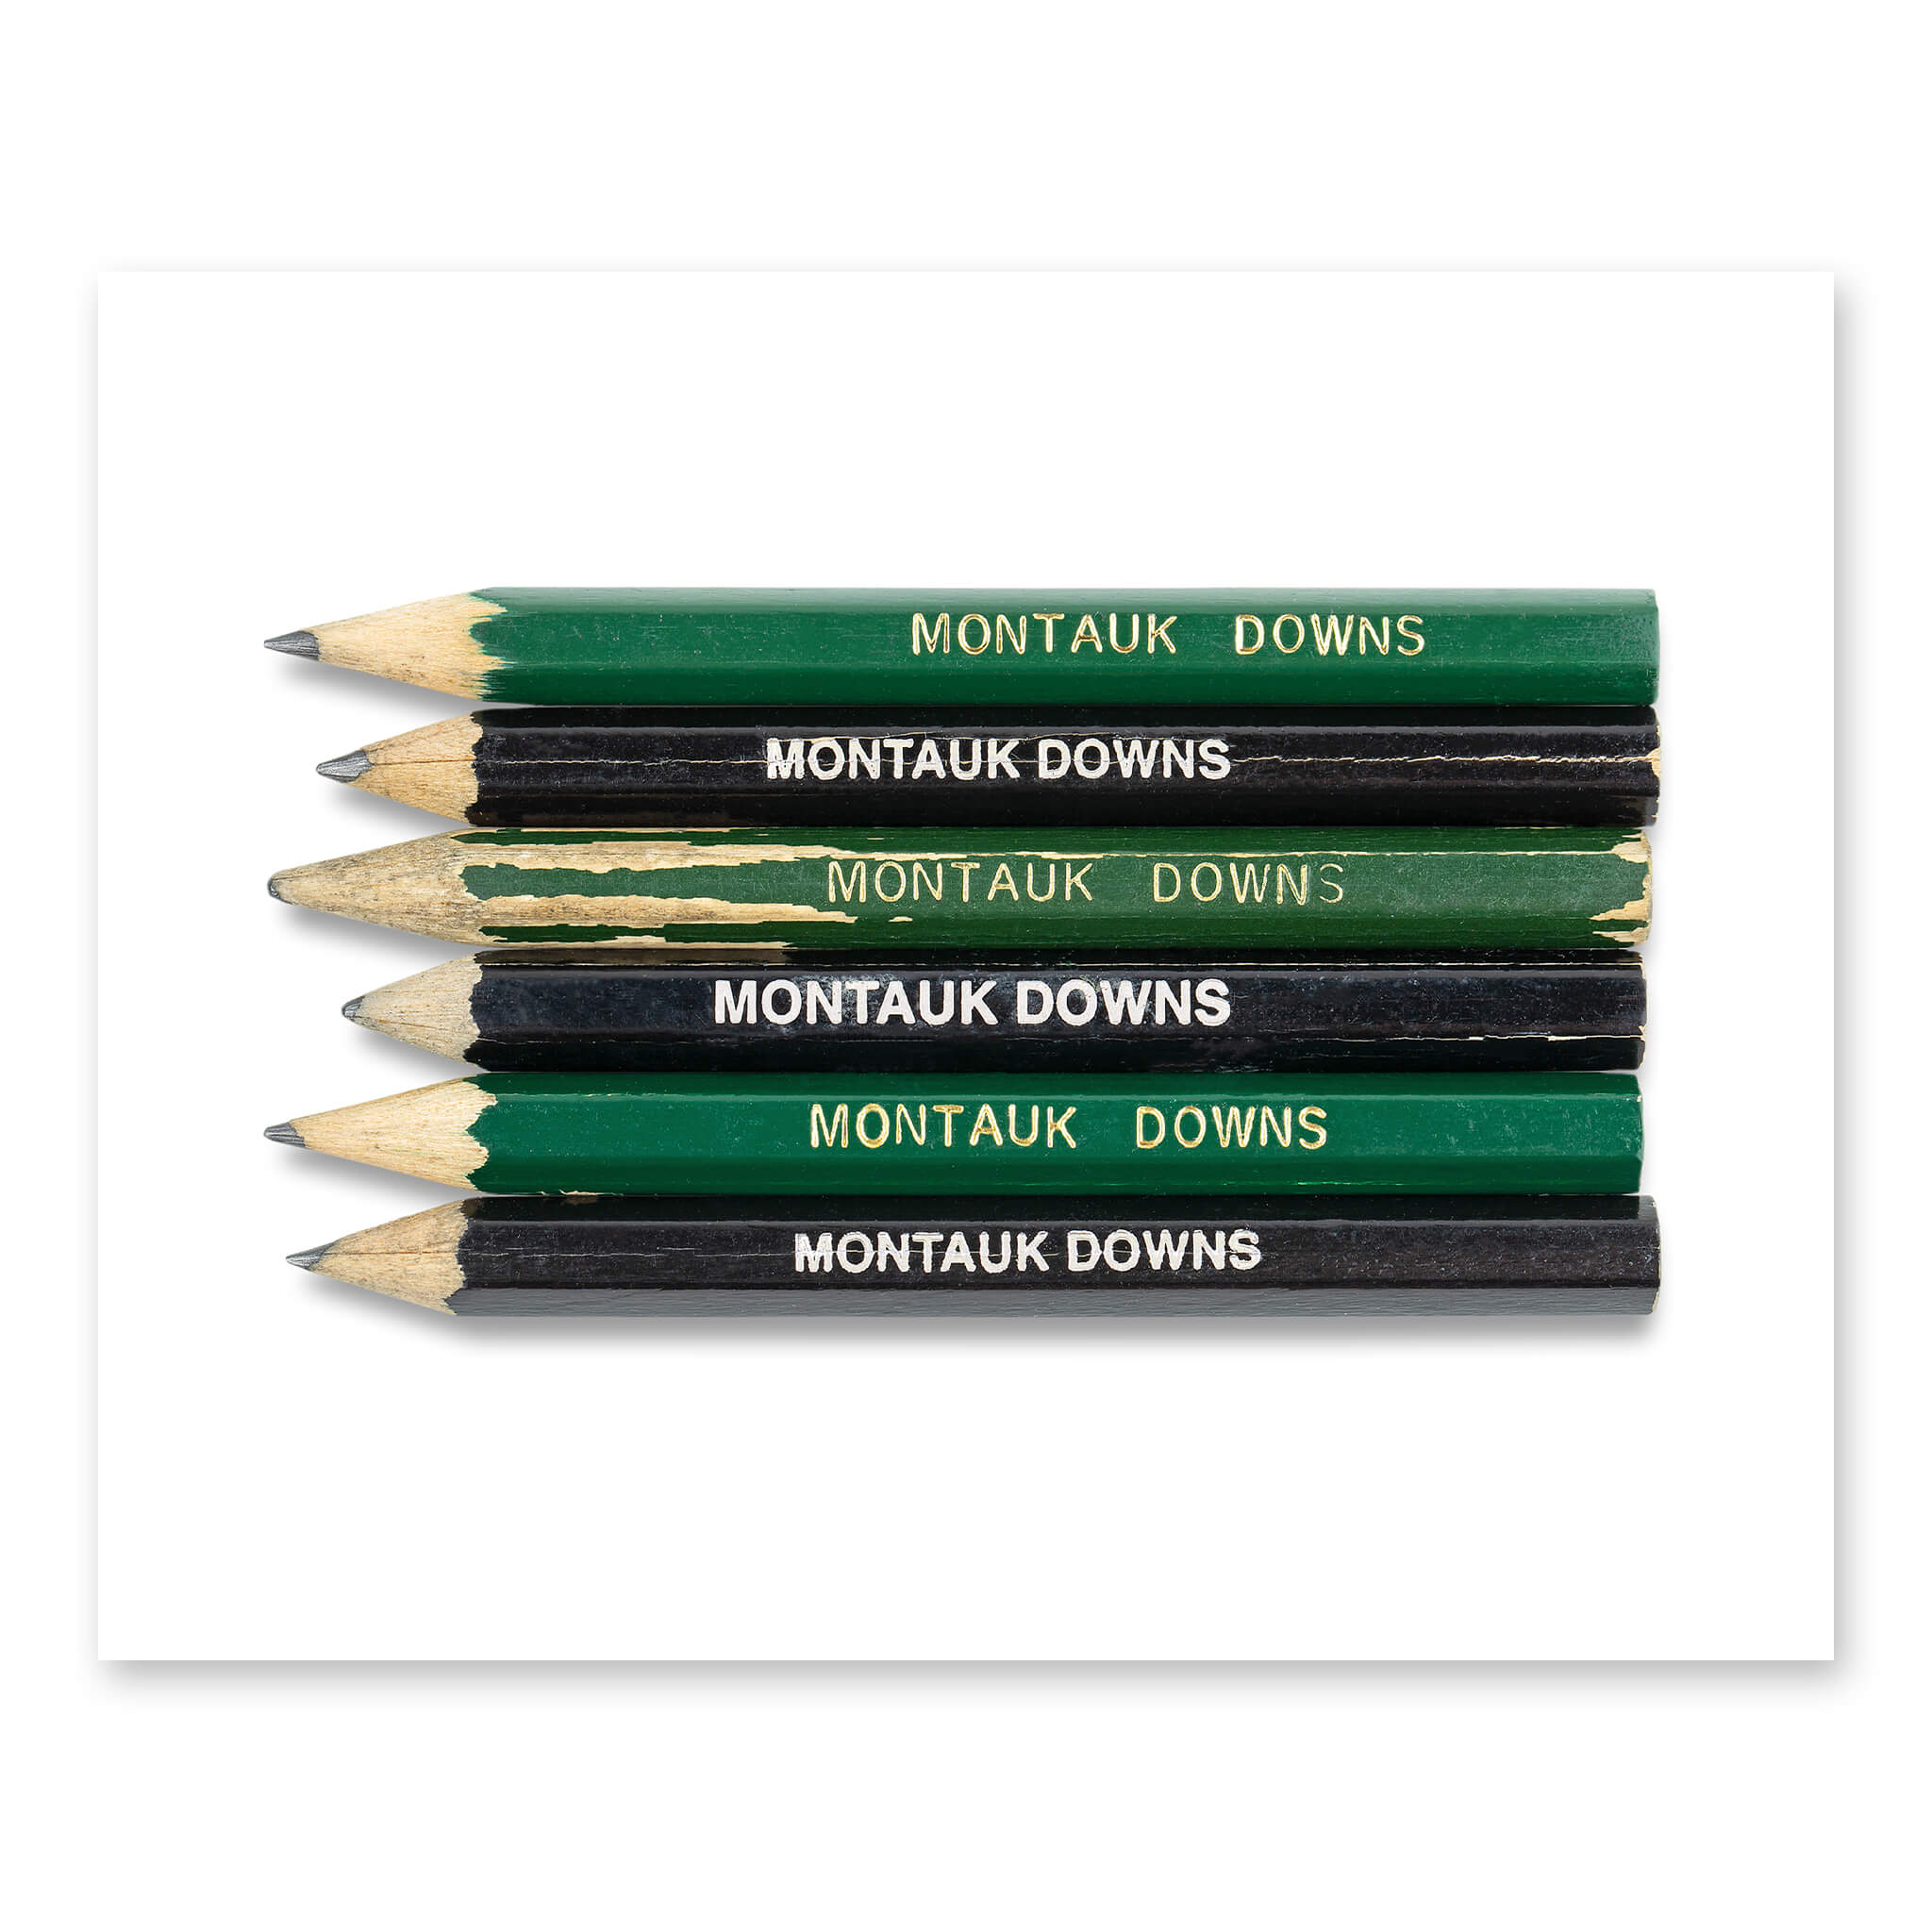 Montauk Downs (Pencils)